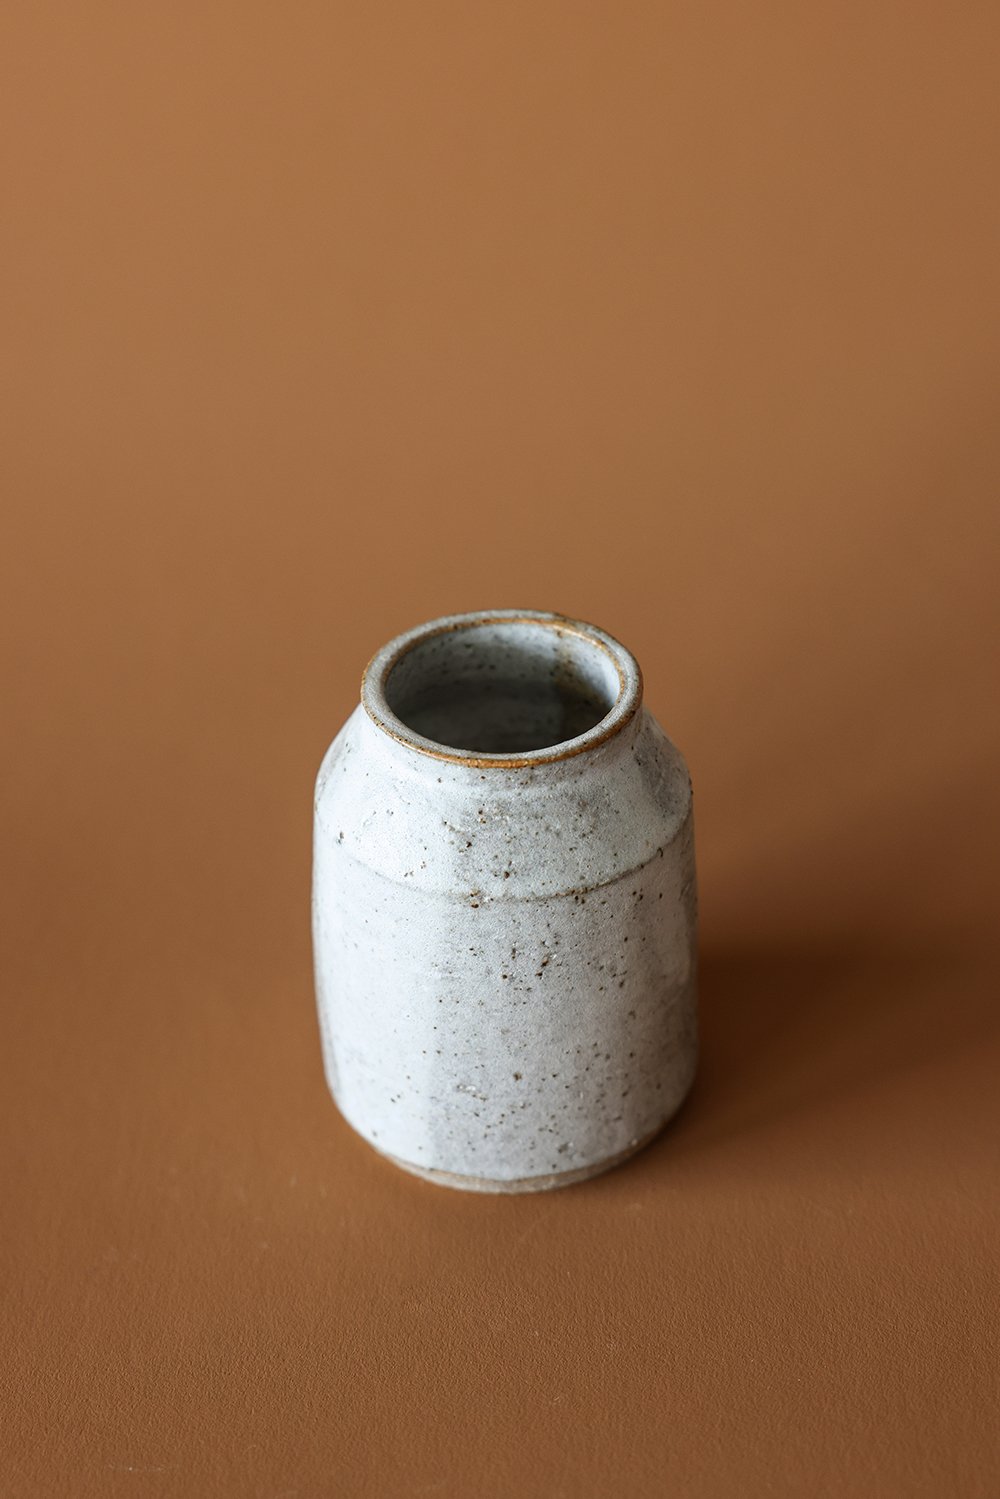 Matt Biocich Ceramics Studio